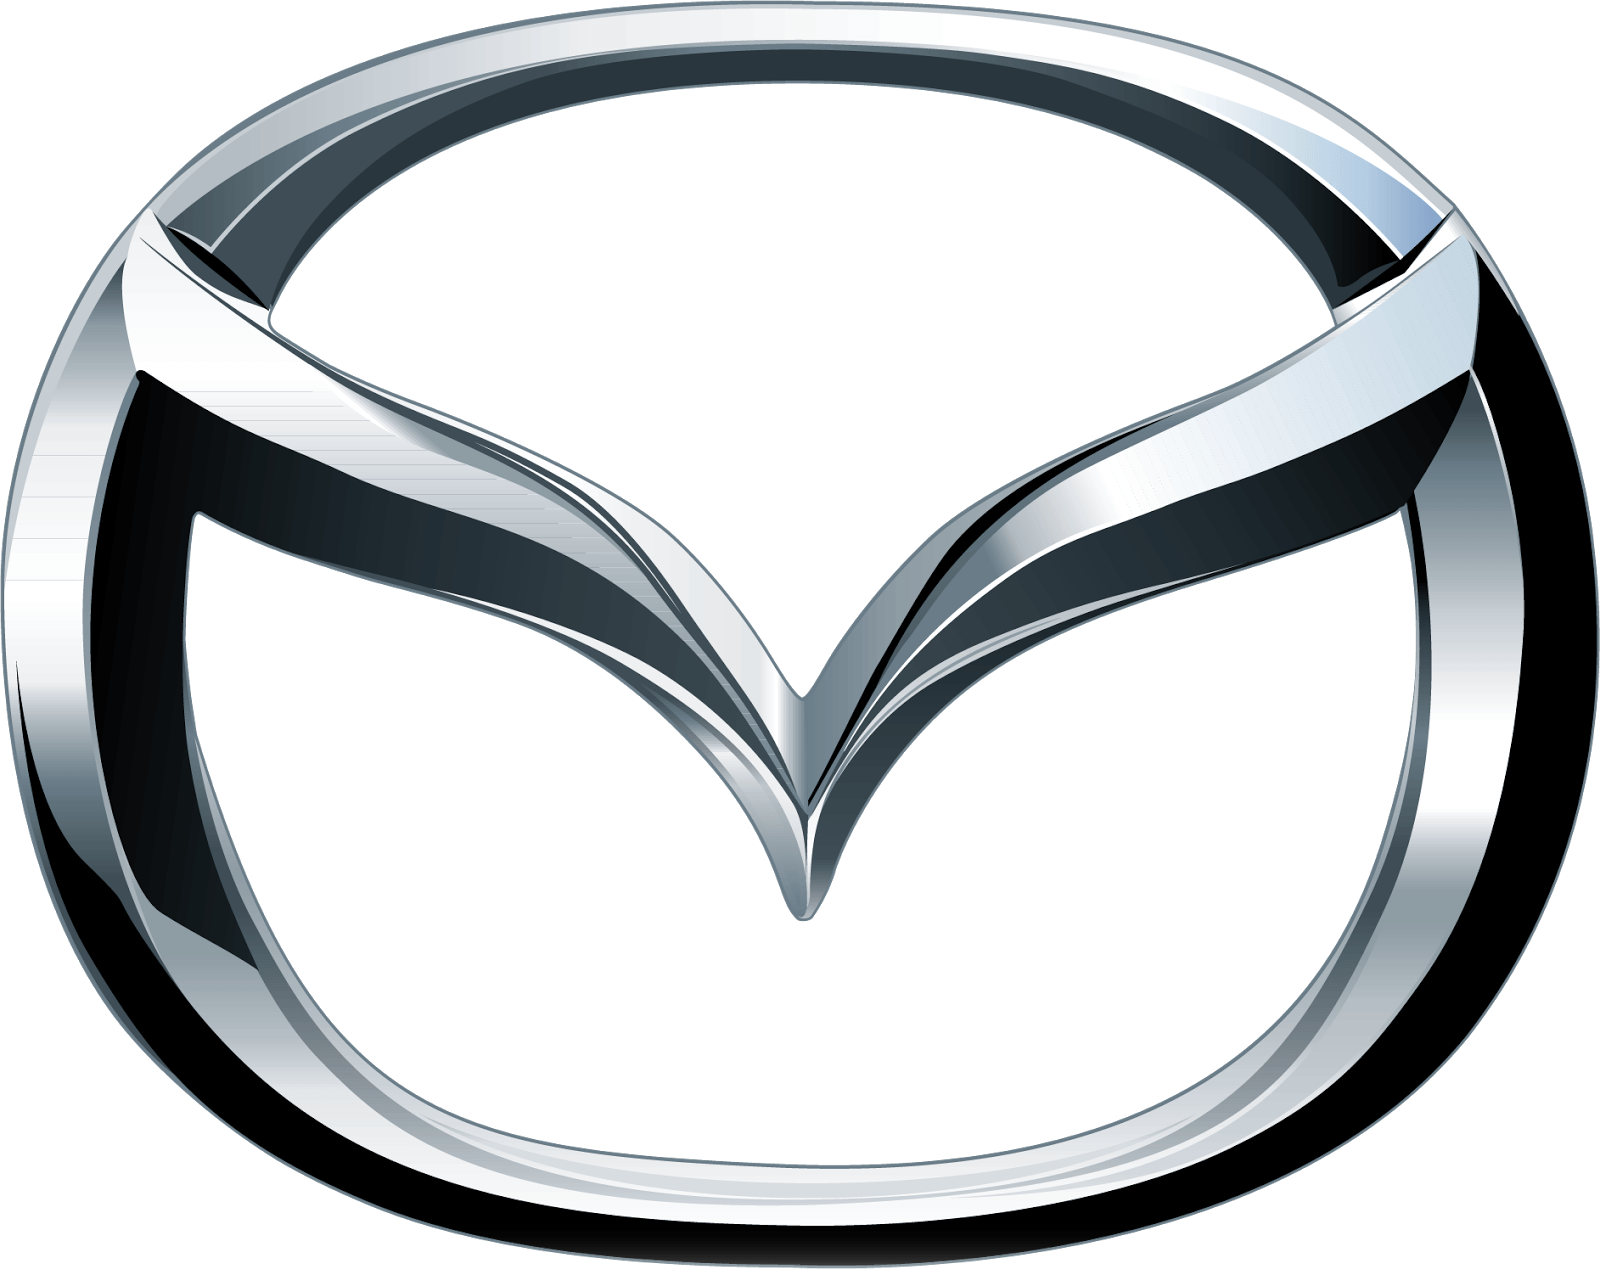 1936 Mazda Logo - Mazda Logo, Mazda Car Symbol Meaning and History | Car Brand Names.com